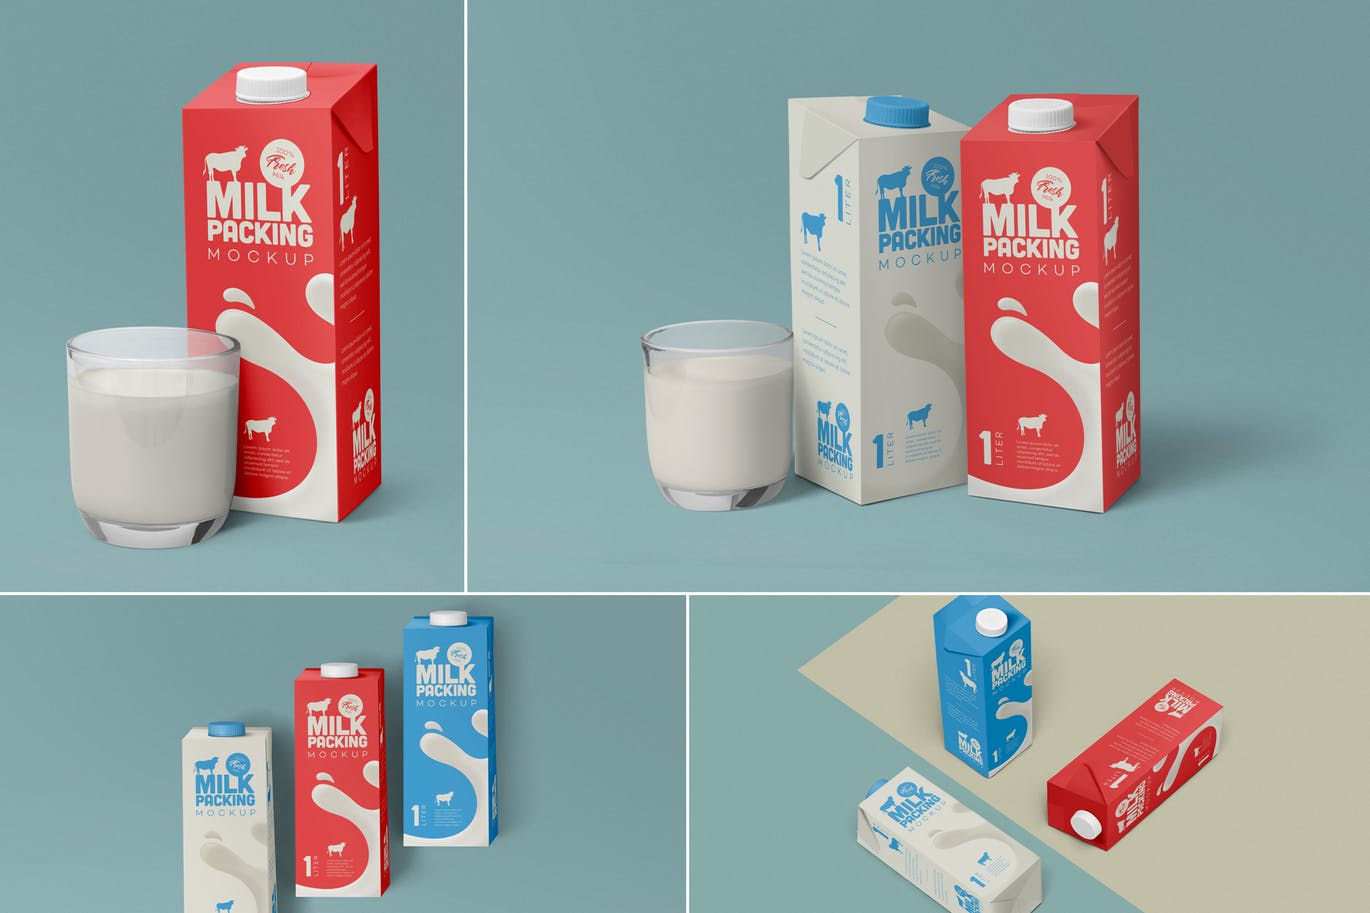 nama minuman susu nama unik untuk usaha minuman susu inspirasi nama merek minuman susu nama minuman susu kekinian nama brand minuman susu nama minuman teh campur susu nama produk minuman susu